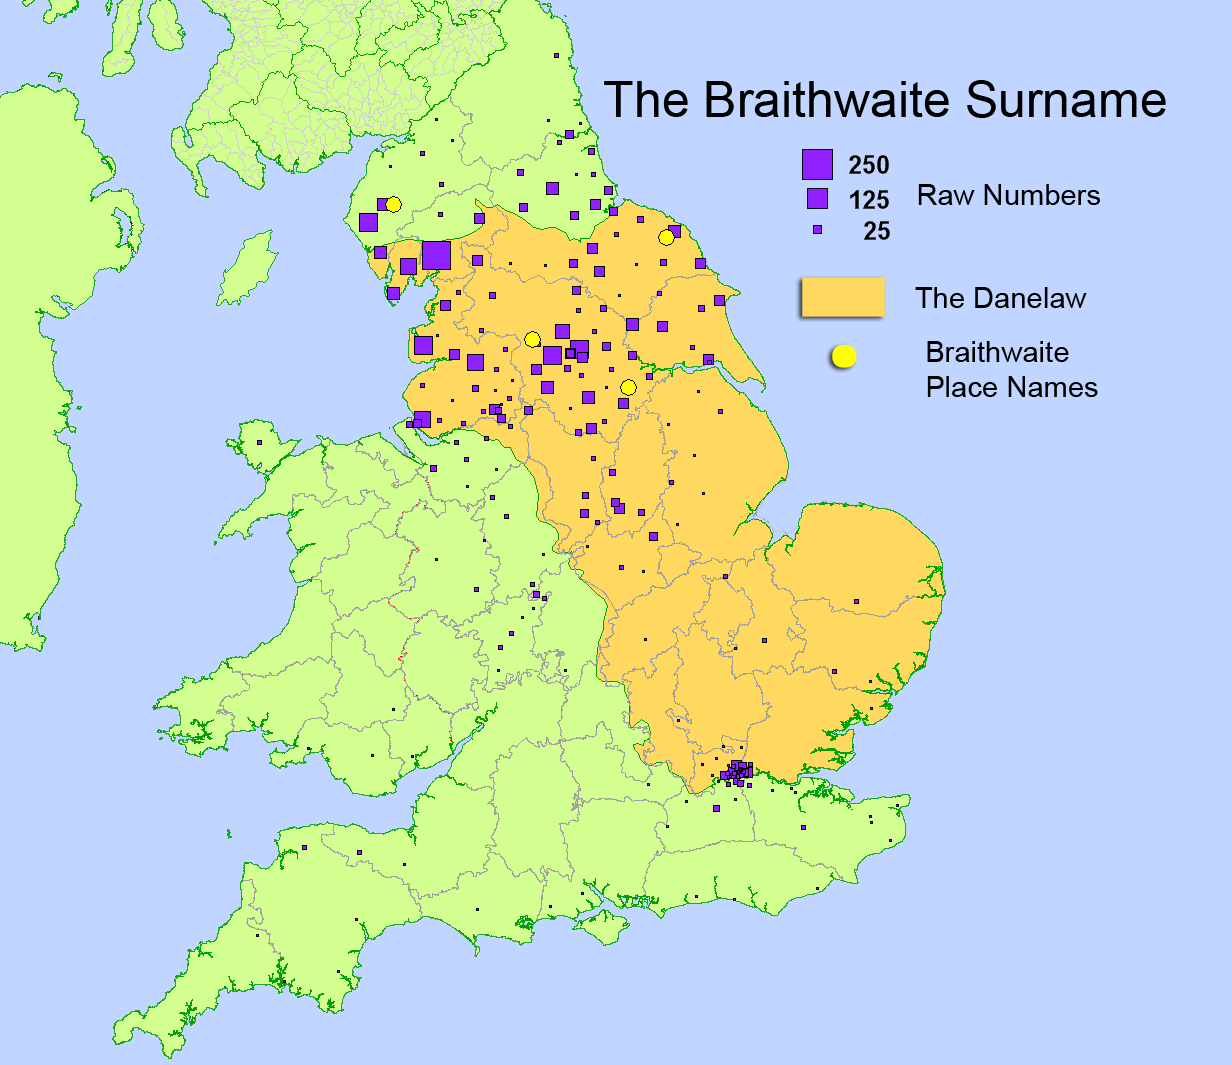 the braithwaite surname has its origins from a number of braithwaite